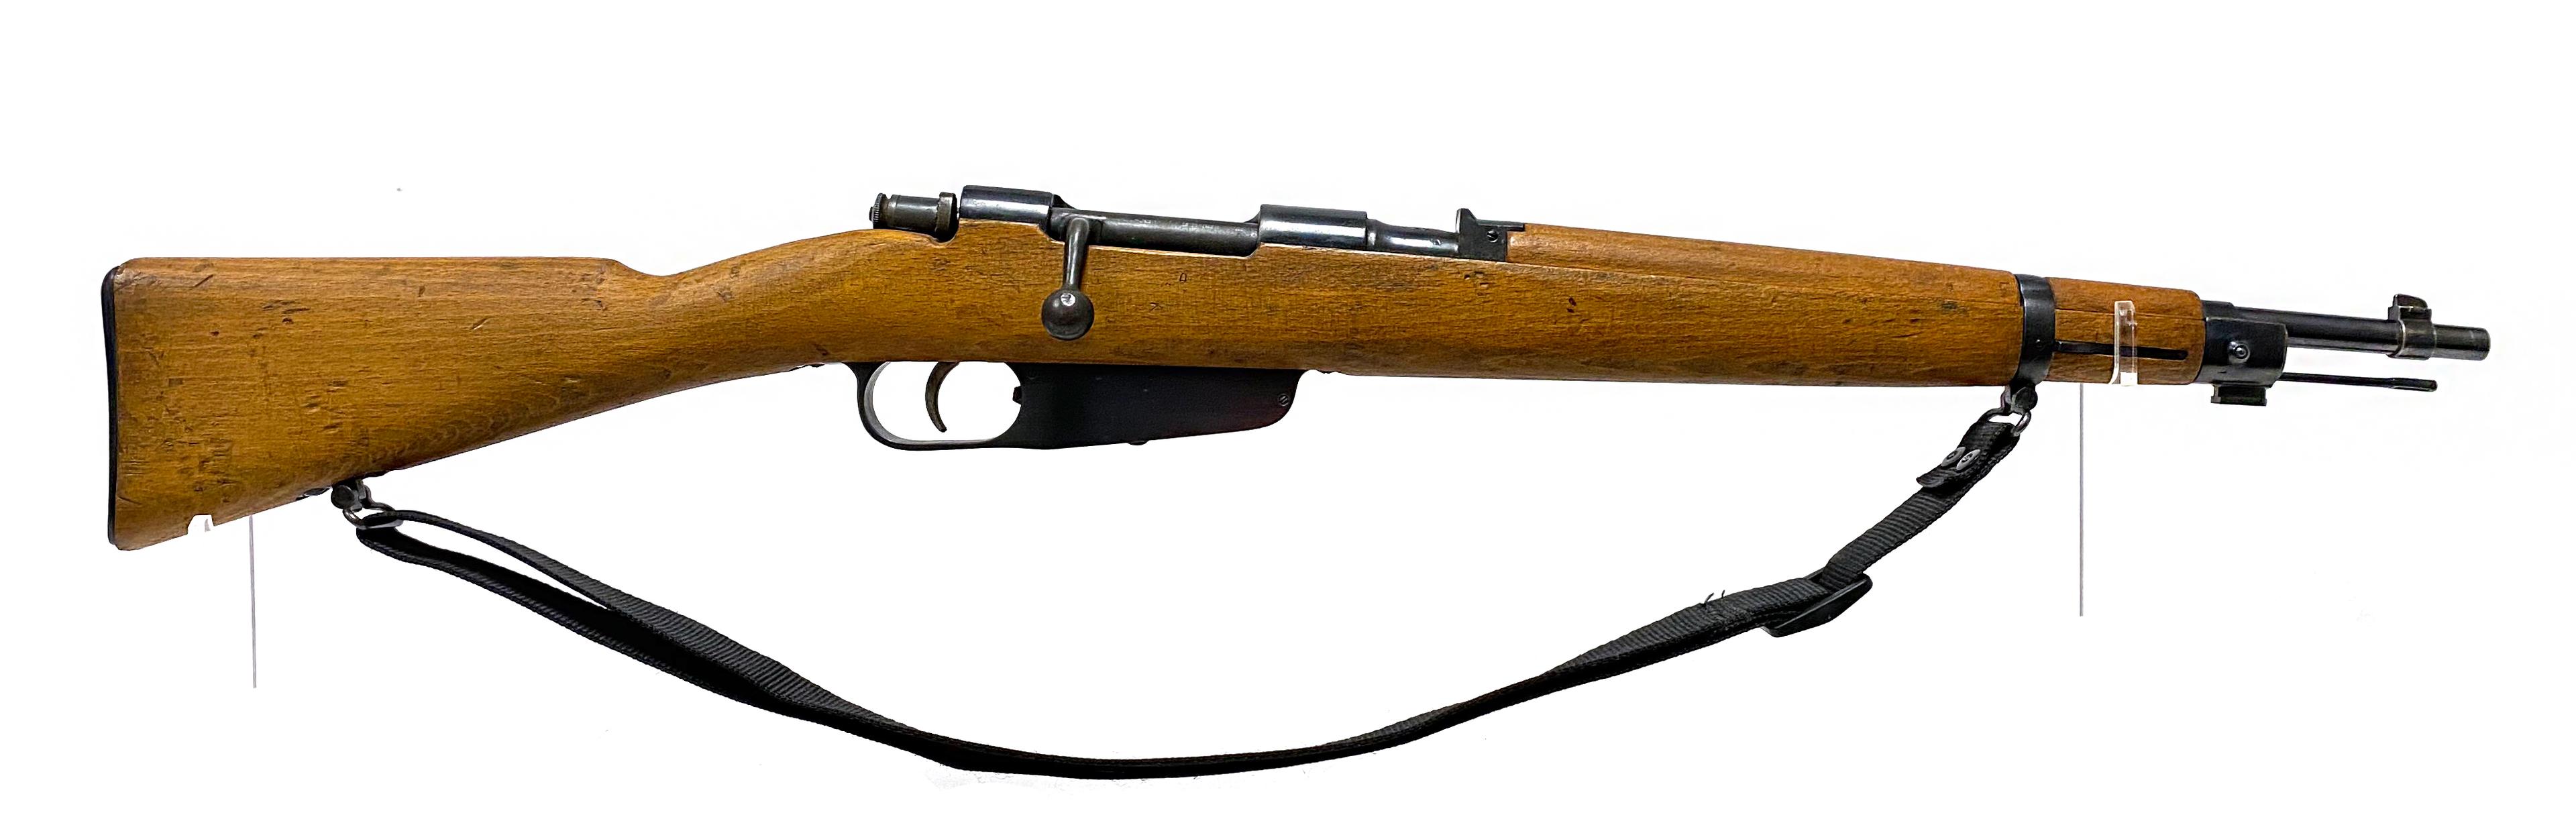 Brescia 1942 Italian Army WWII M91/38 6.5x52mm Carcano Carbine